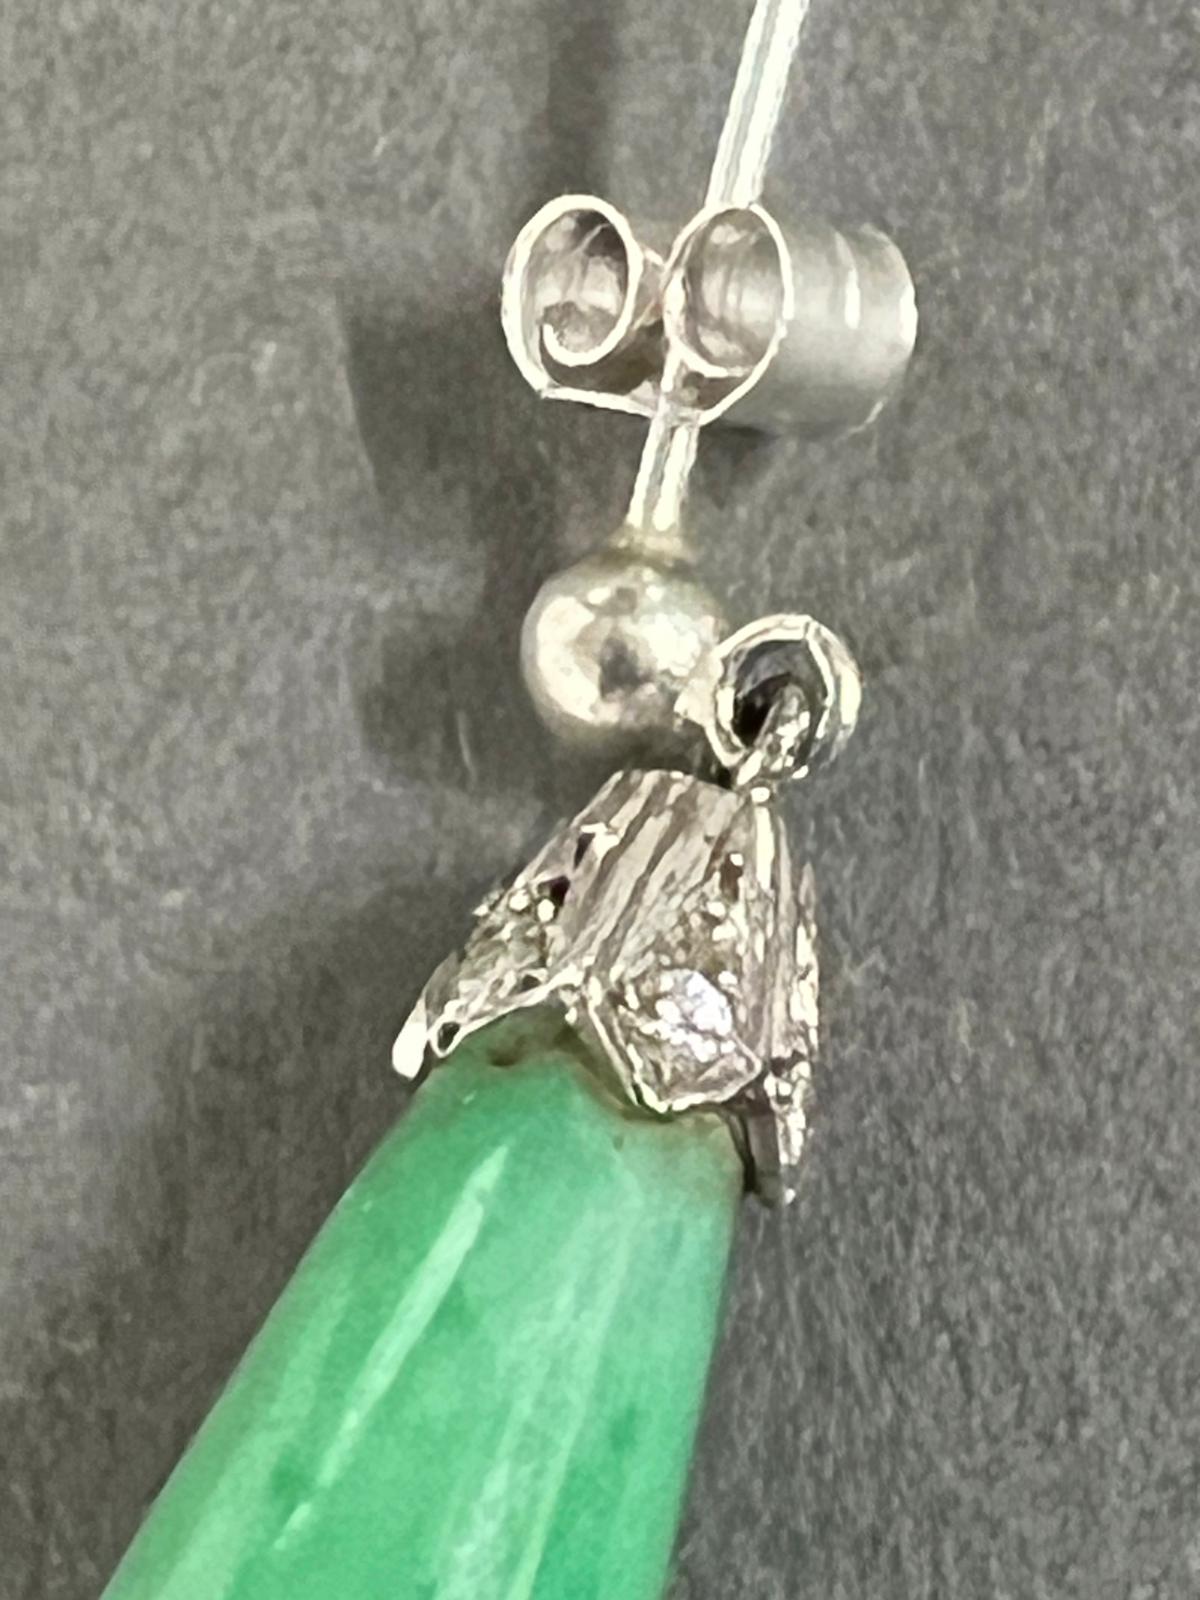 A pair of Chinese jade drop earrings - Image 5 of 6